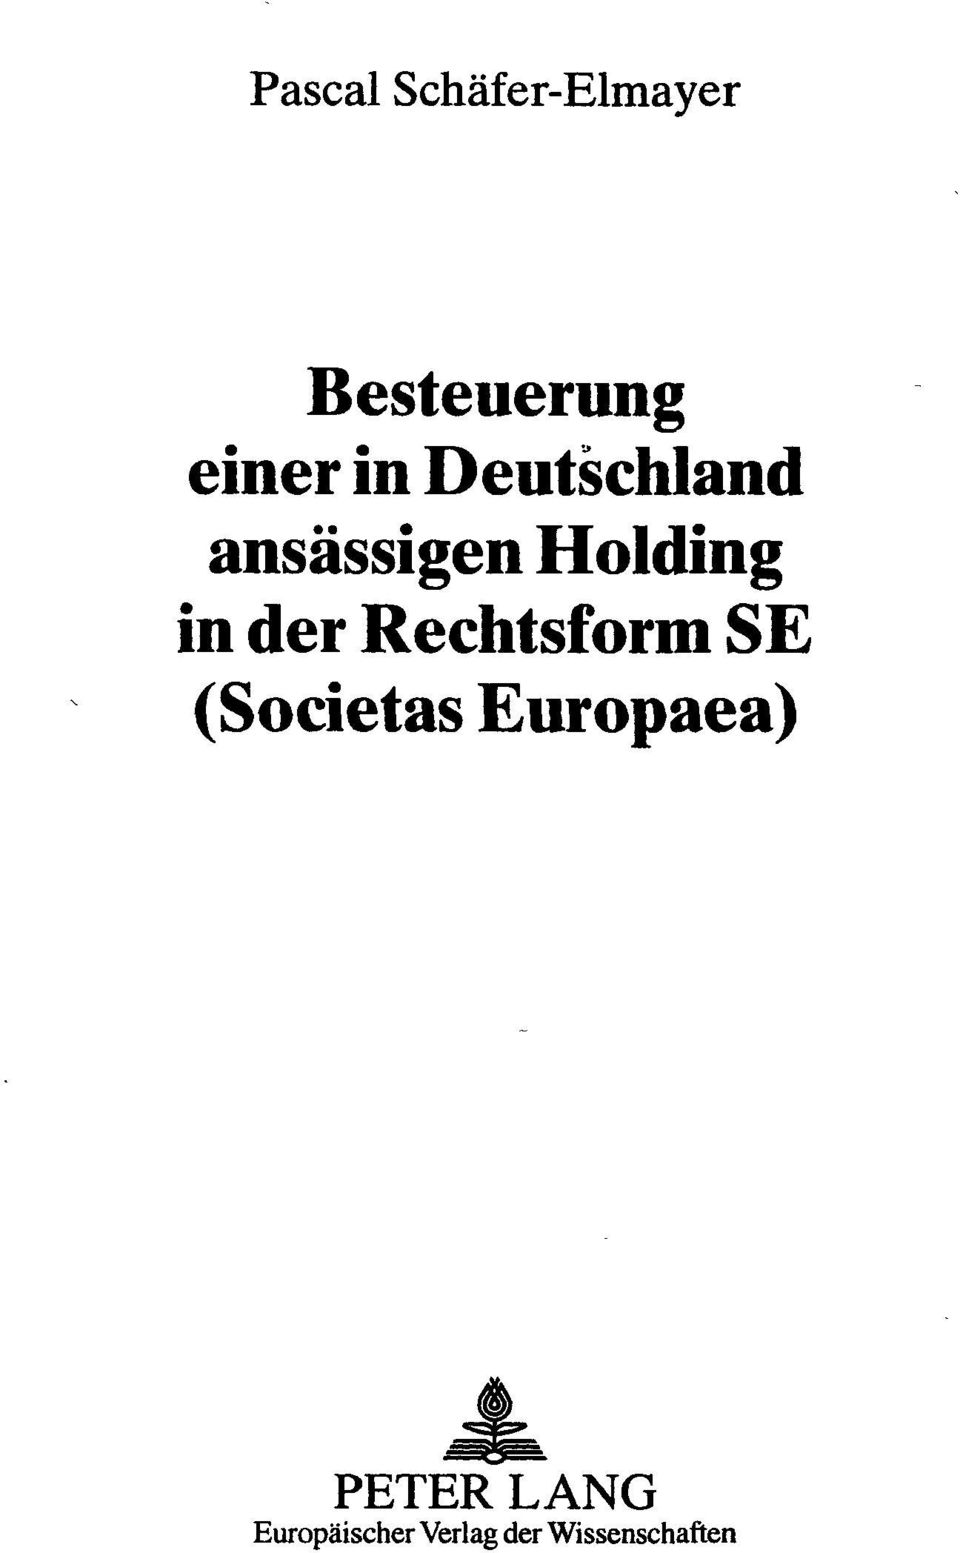 Rechtsform SE (Societas Europaea) PETER